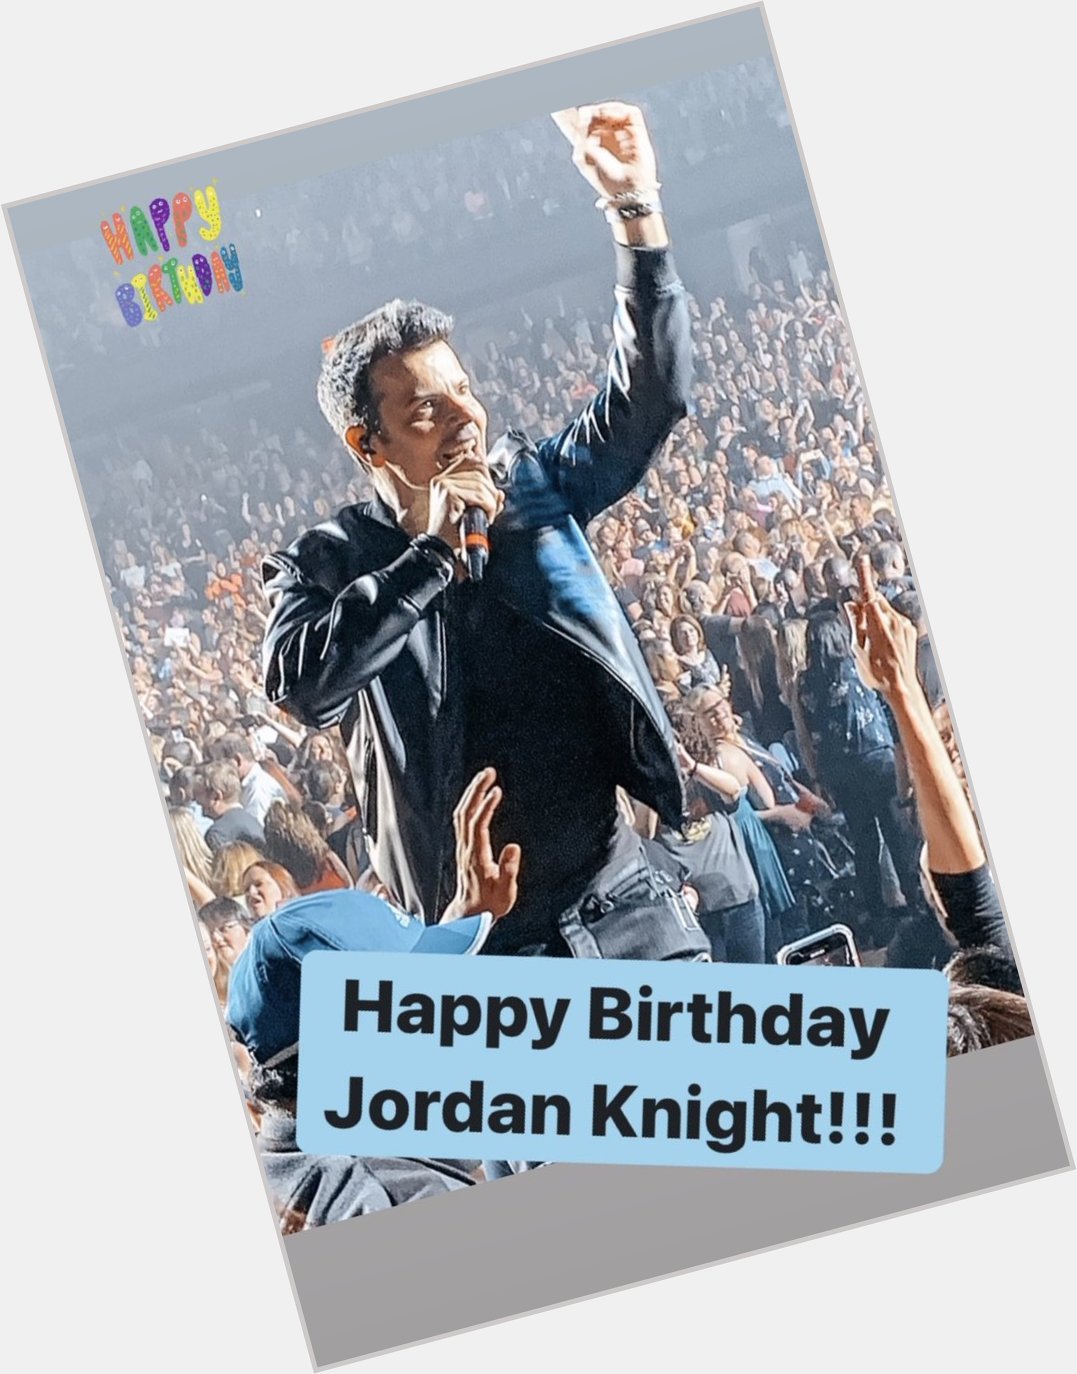 Happy Birthday Jordan Knight!!! 